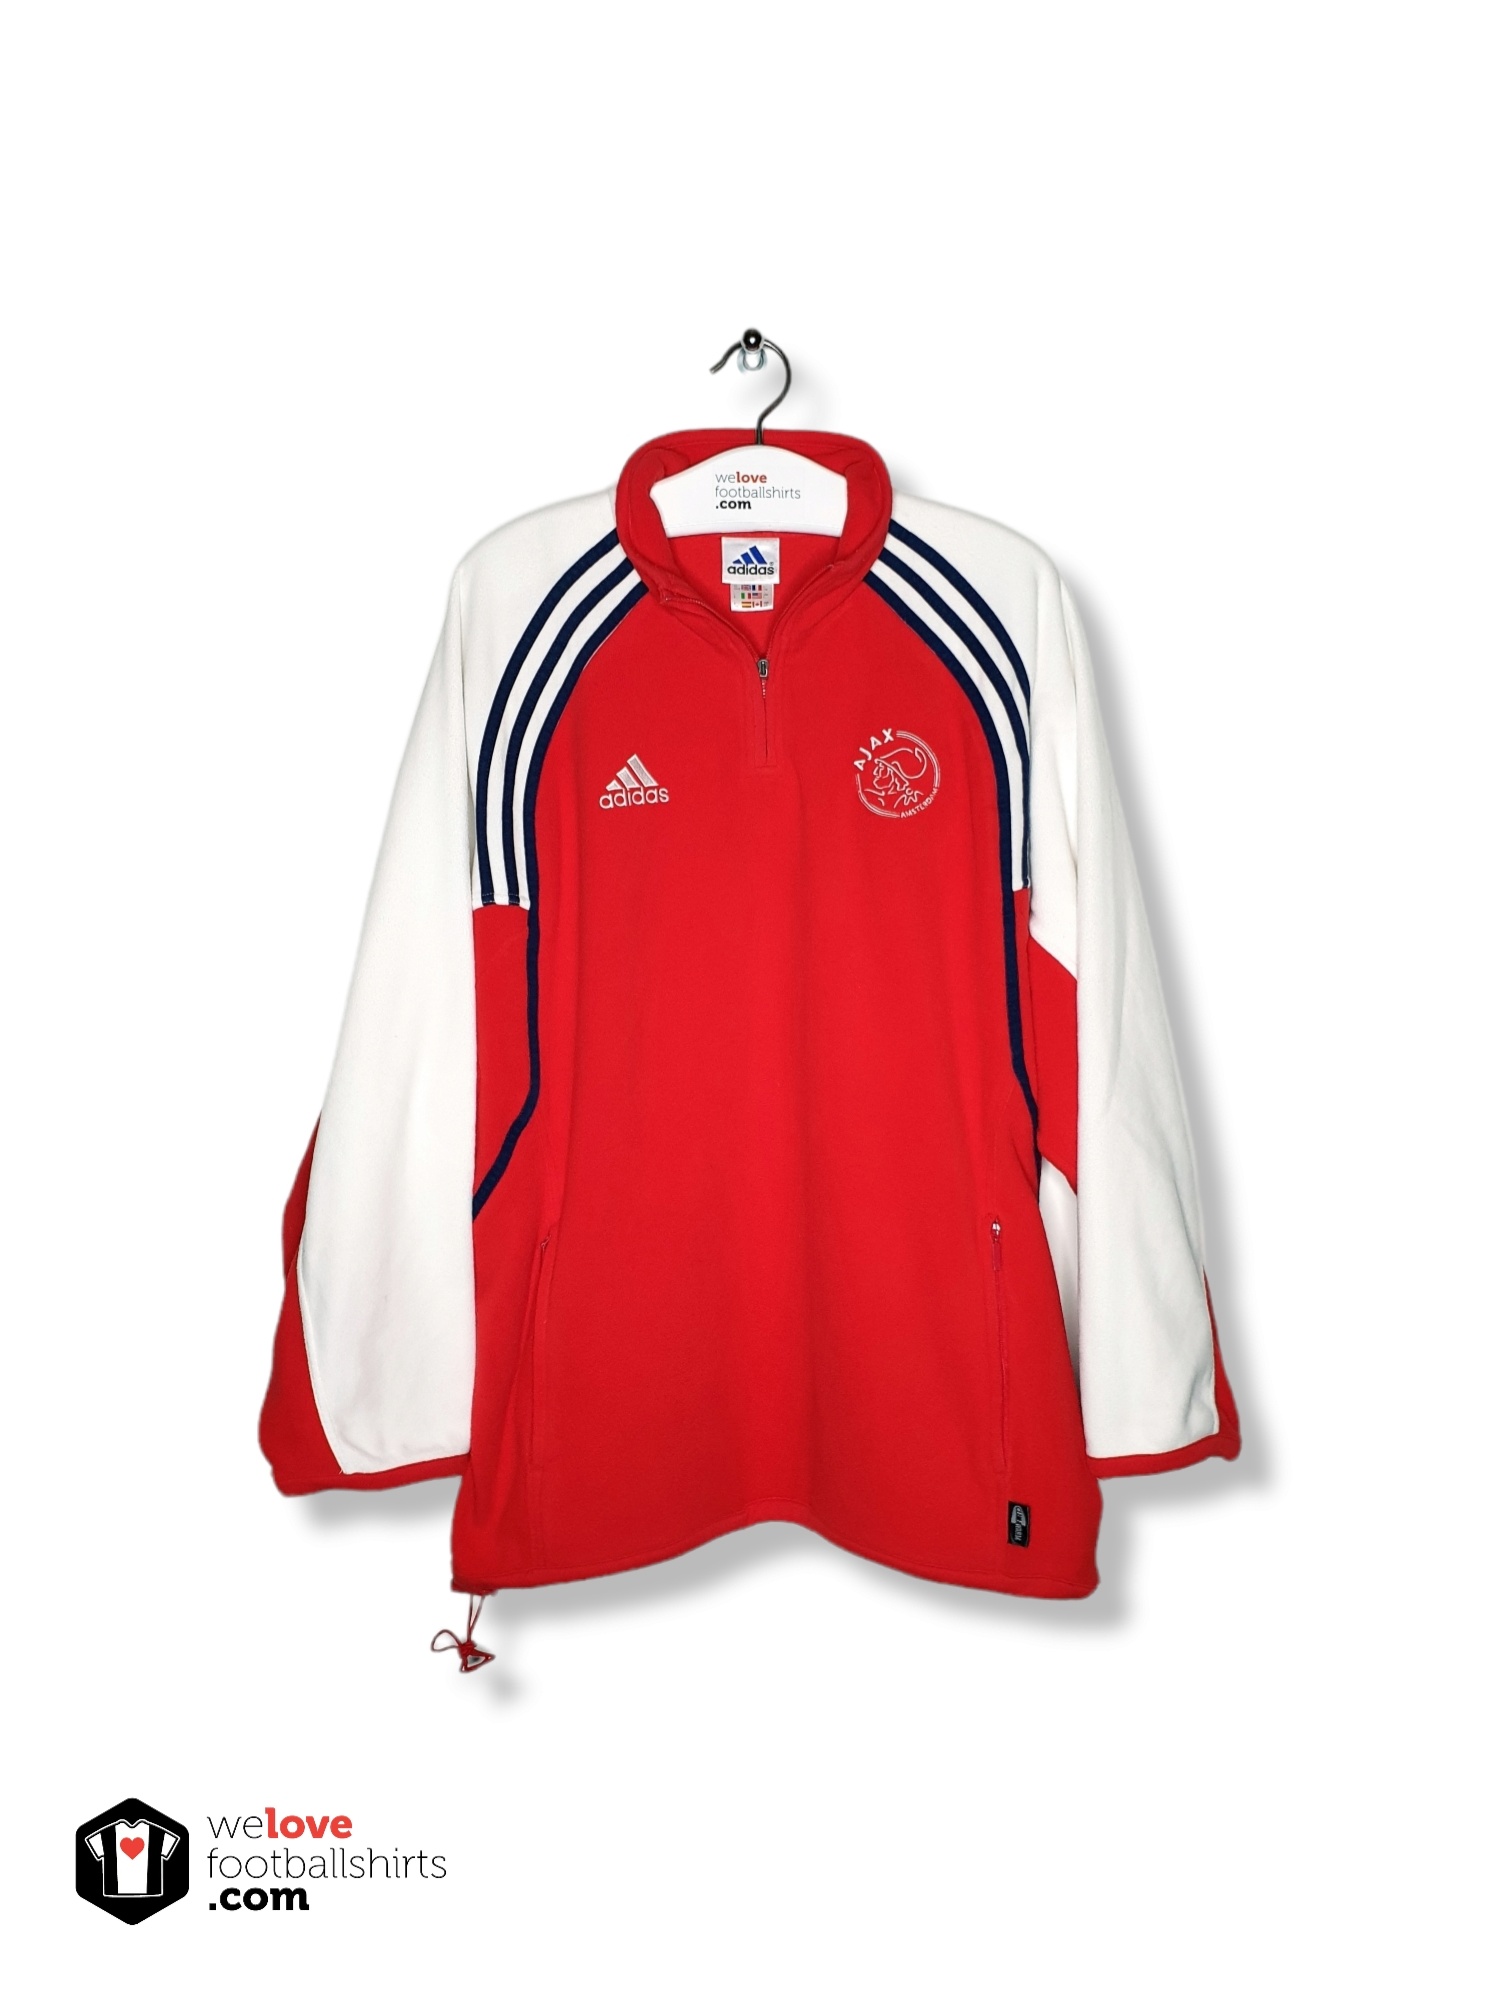 Adidas voetbal fleece trui Ajax 2000/01 - Welovefootballshirts.com